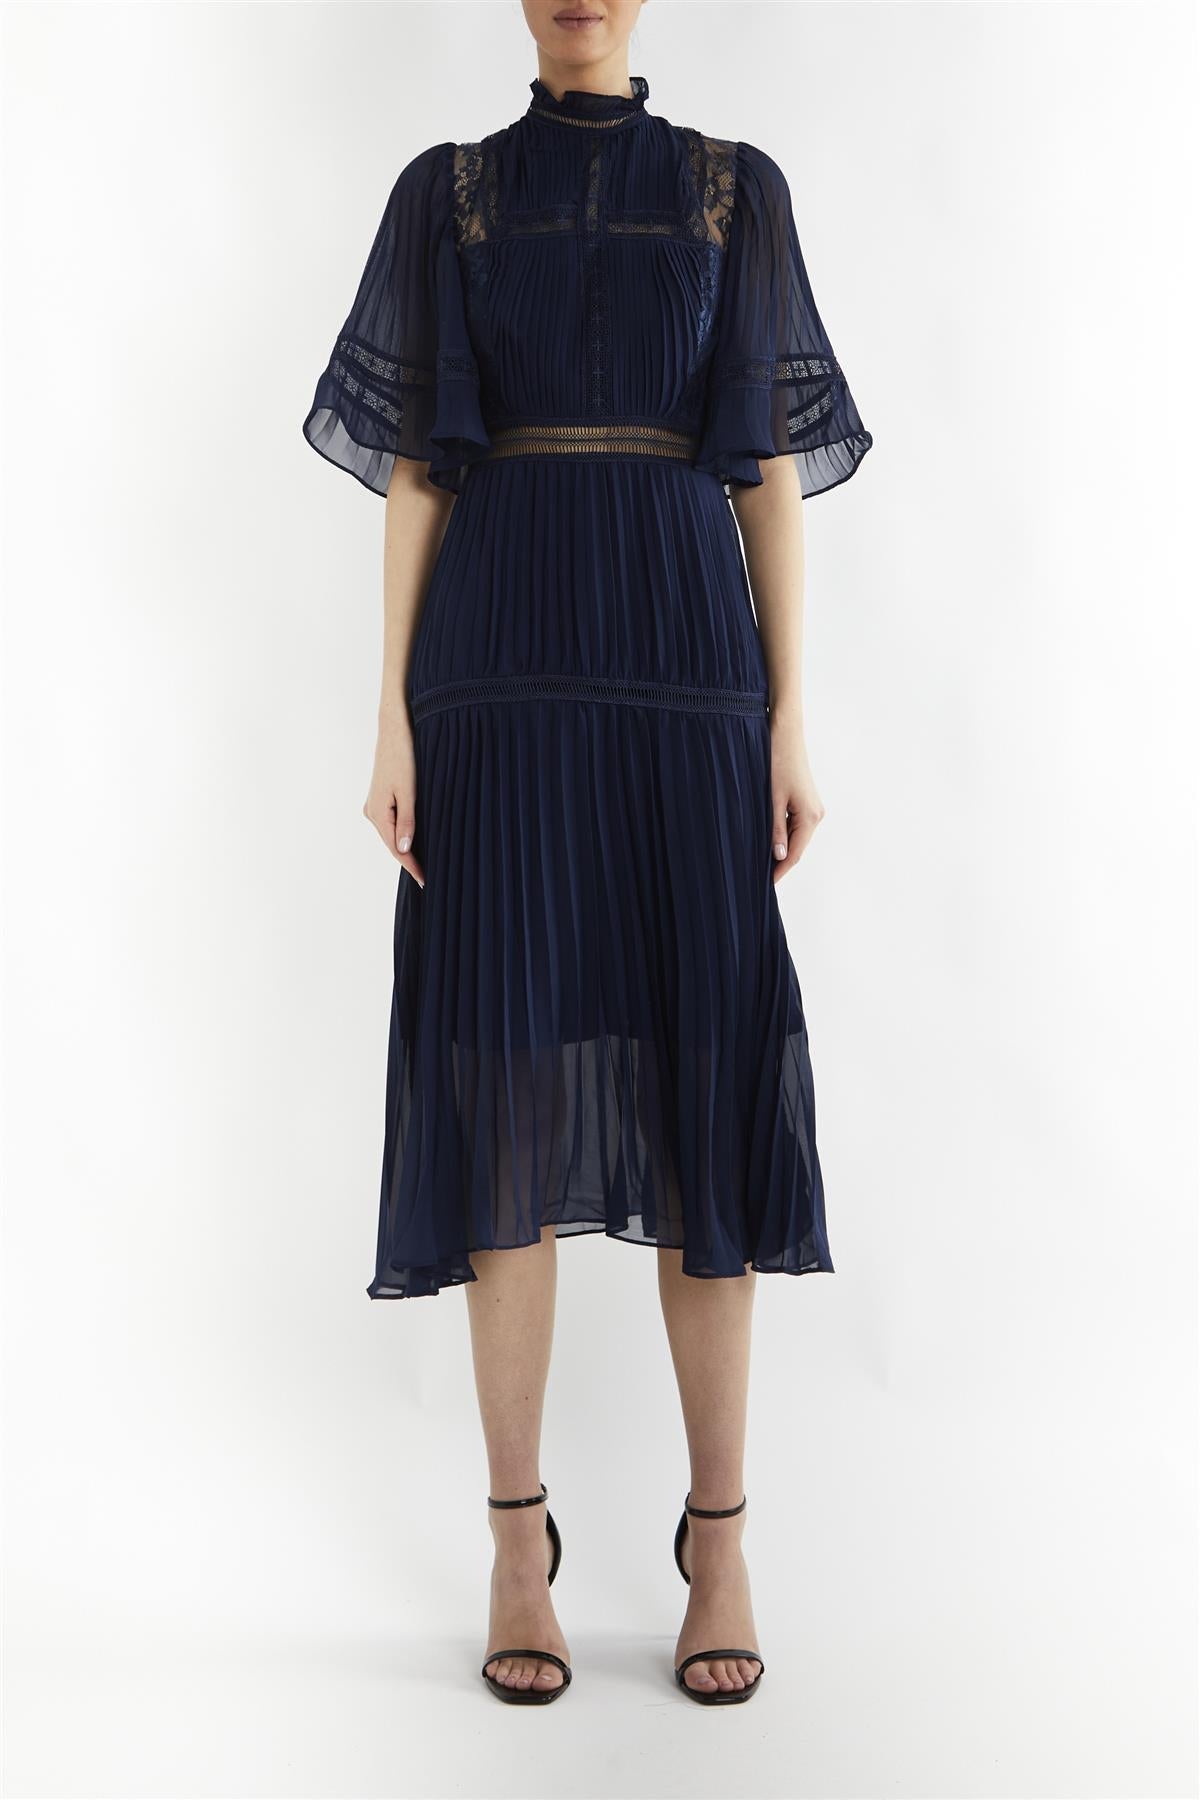 Ellie Navy Mixed Lace Pleated Midi Dress-image-1